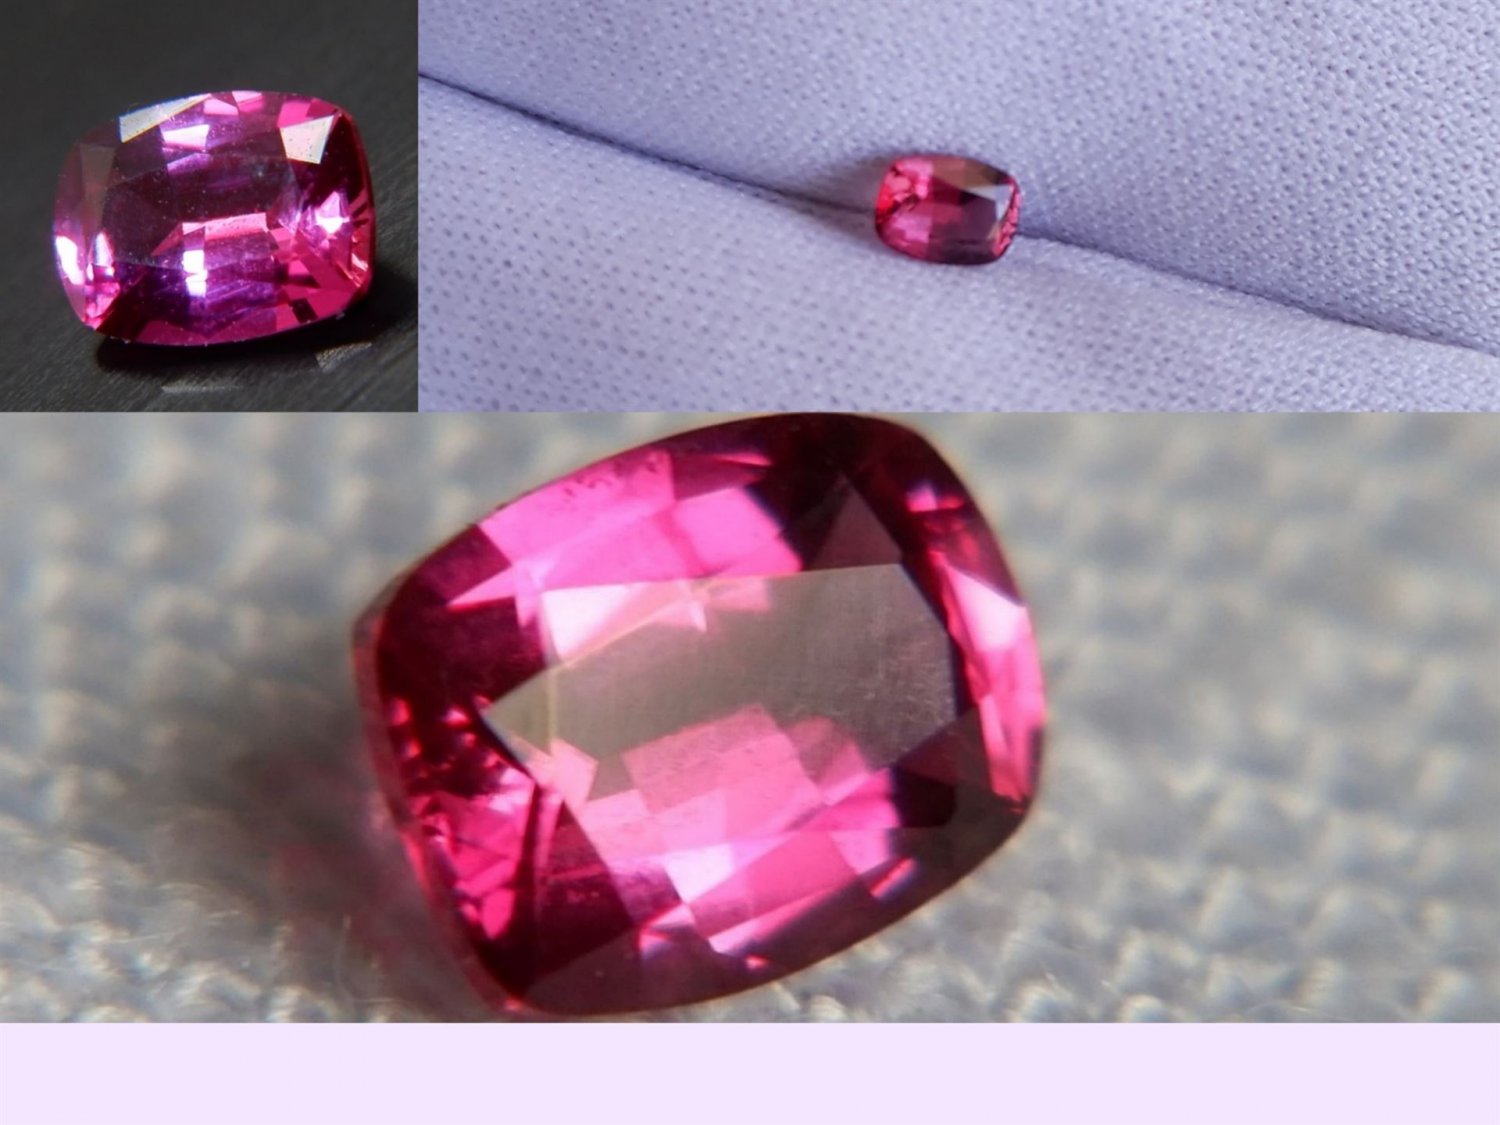 0.46 ct CSL vivid pink Sapphire, unheated, CSL Premium handcrafted rectangular cushion cut Sri Lanka